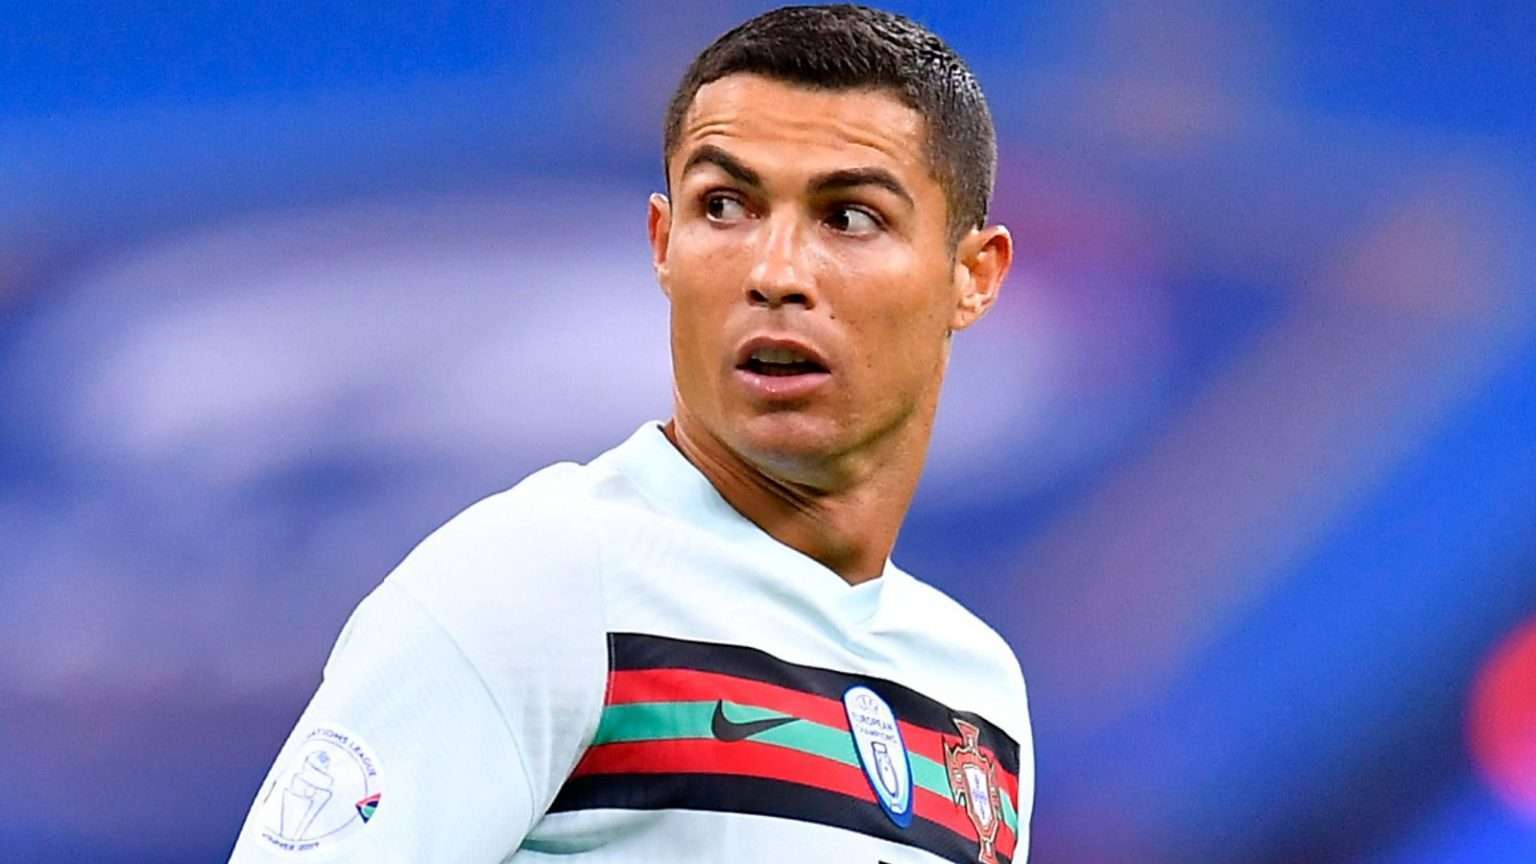 Ronaldo to complete quarantine in Italy after positive coronavirus test